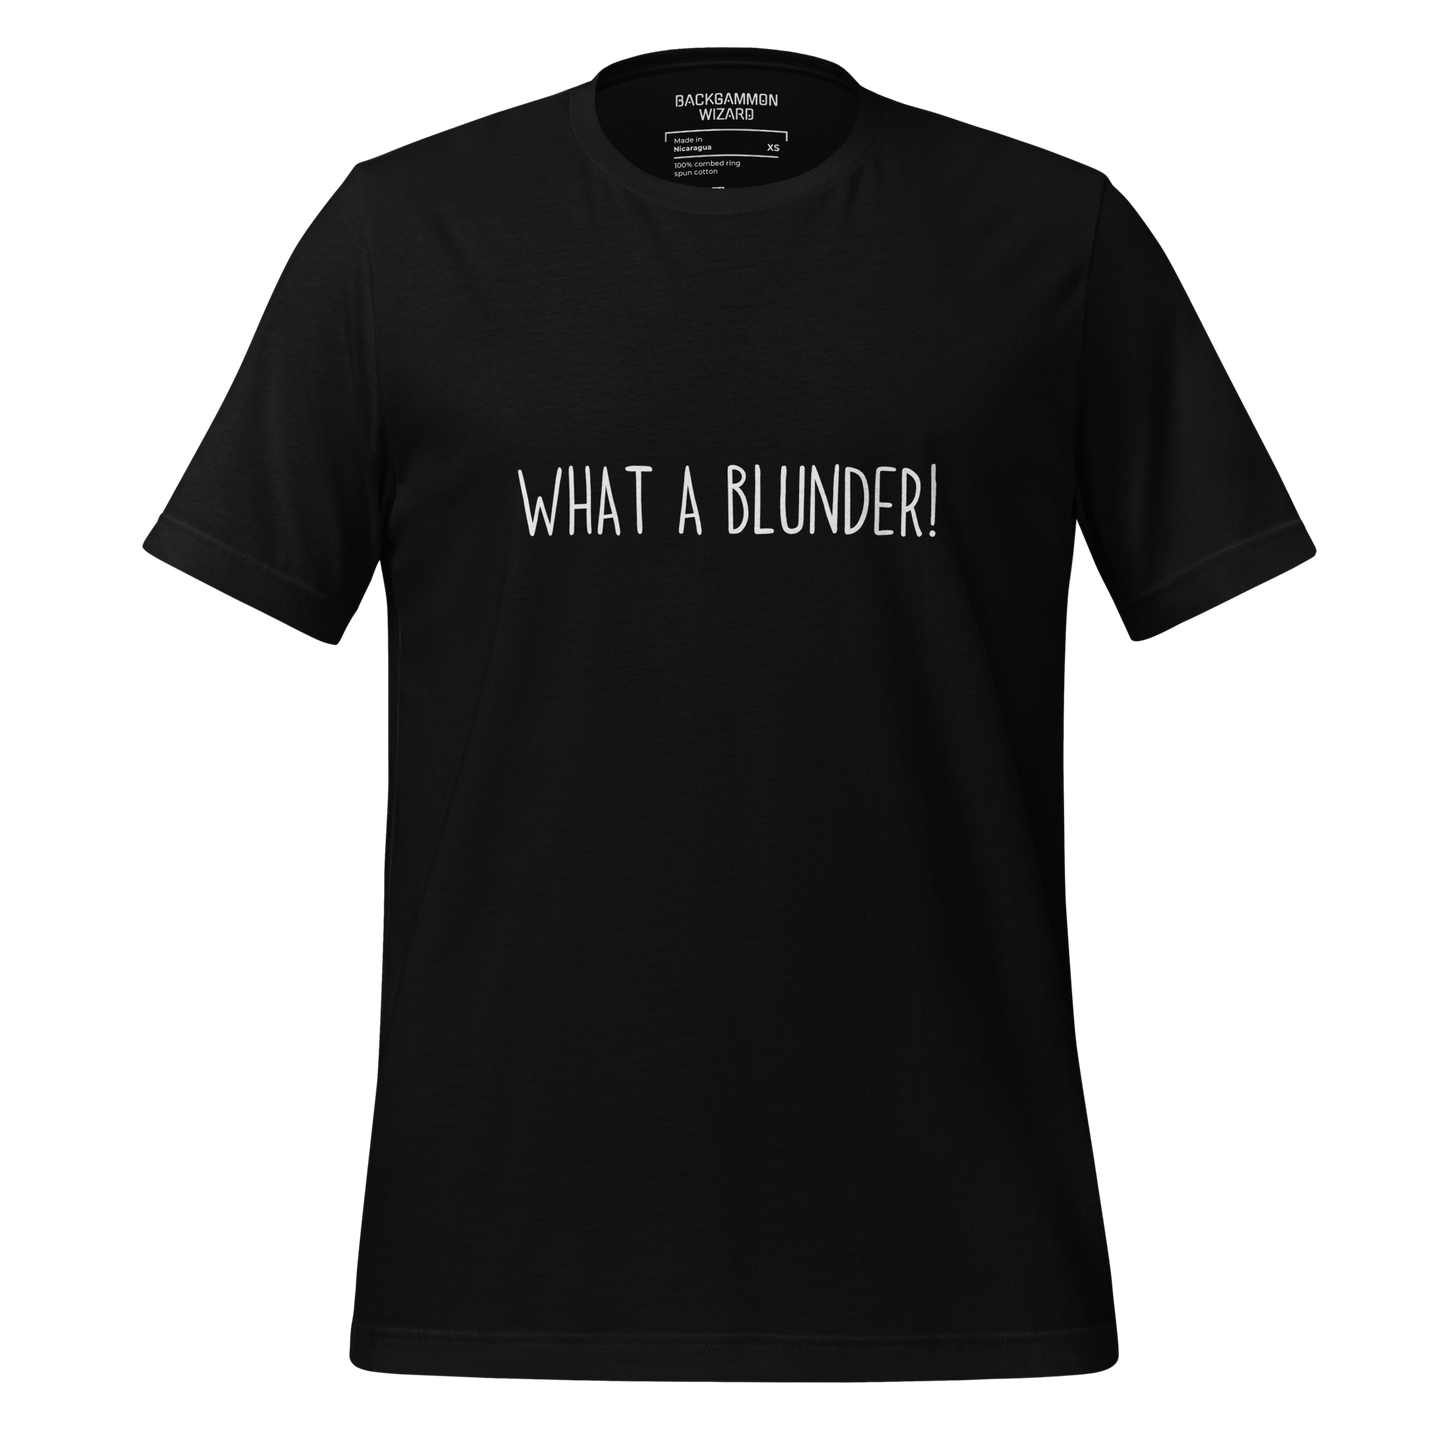 'WHAT A BLUNDER' Shirt